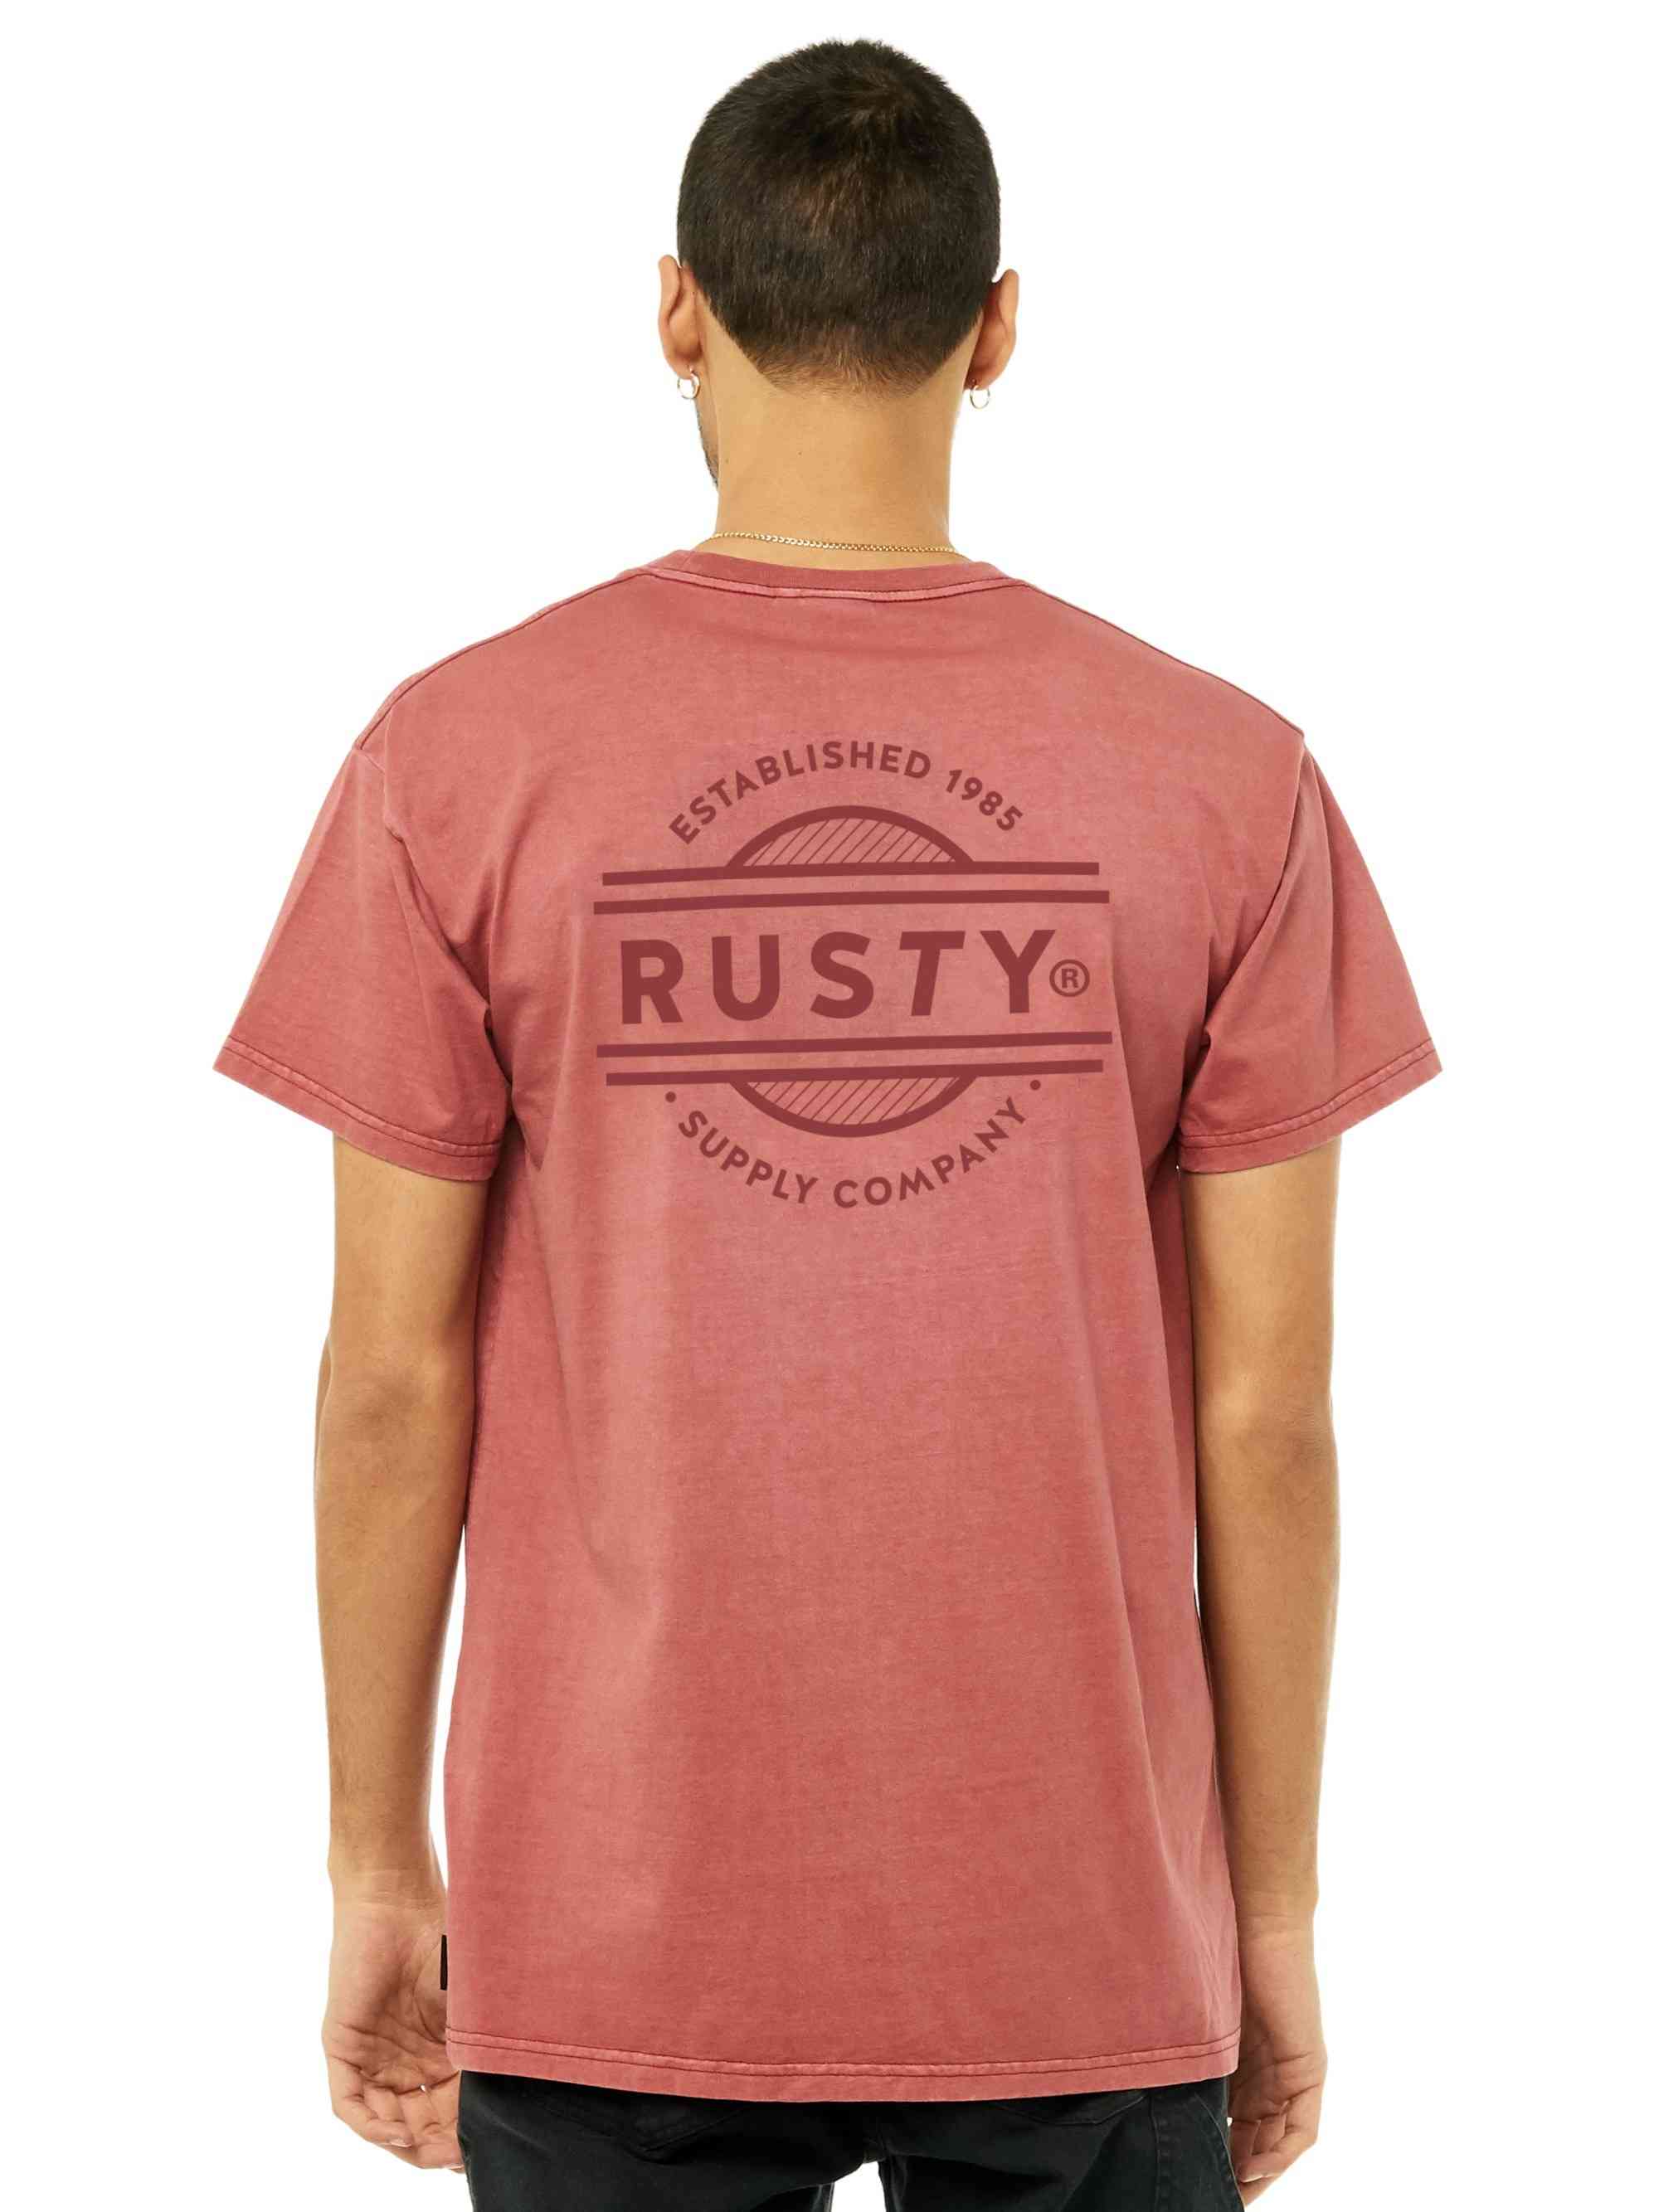 Rusty Cultured Short Sleeve Tee - Bruise Rusty Australia, XXL / Bruise